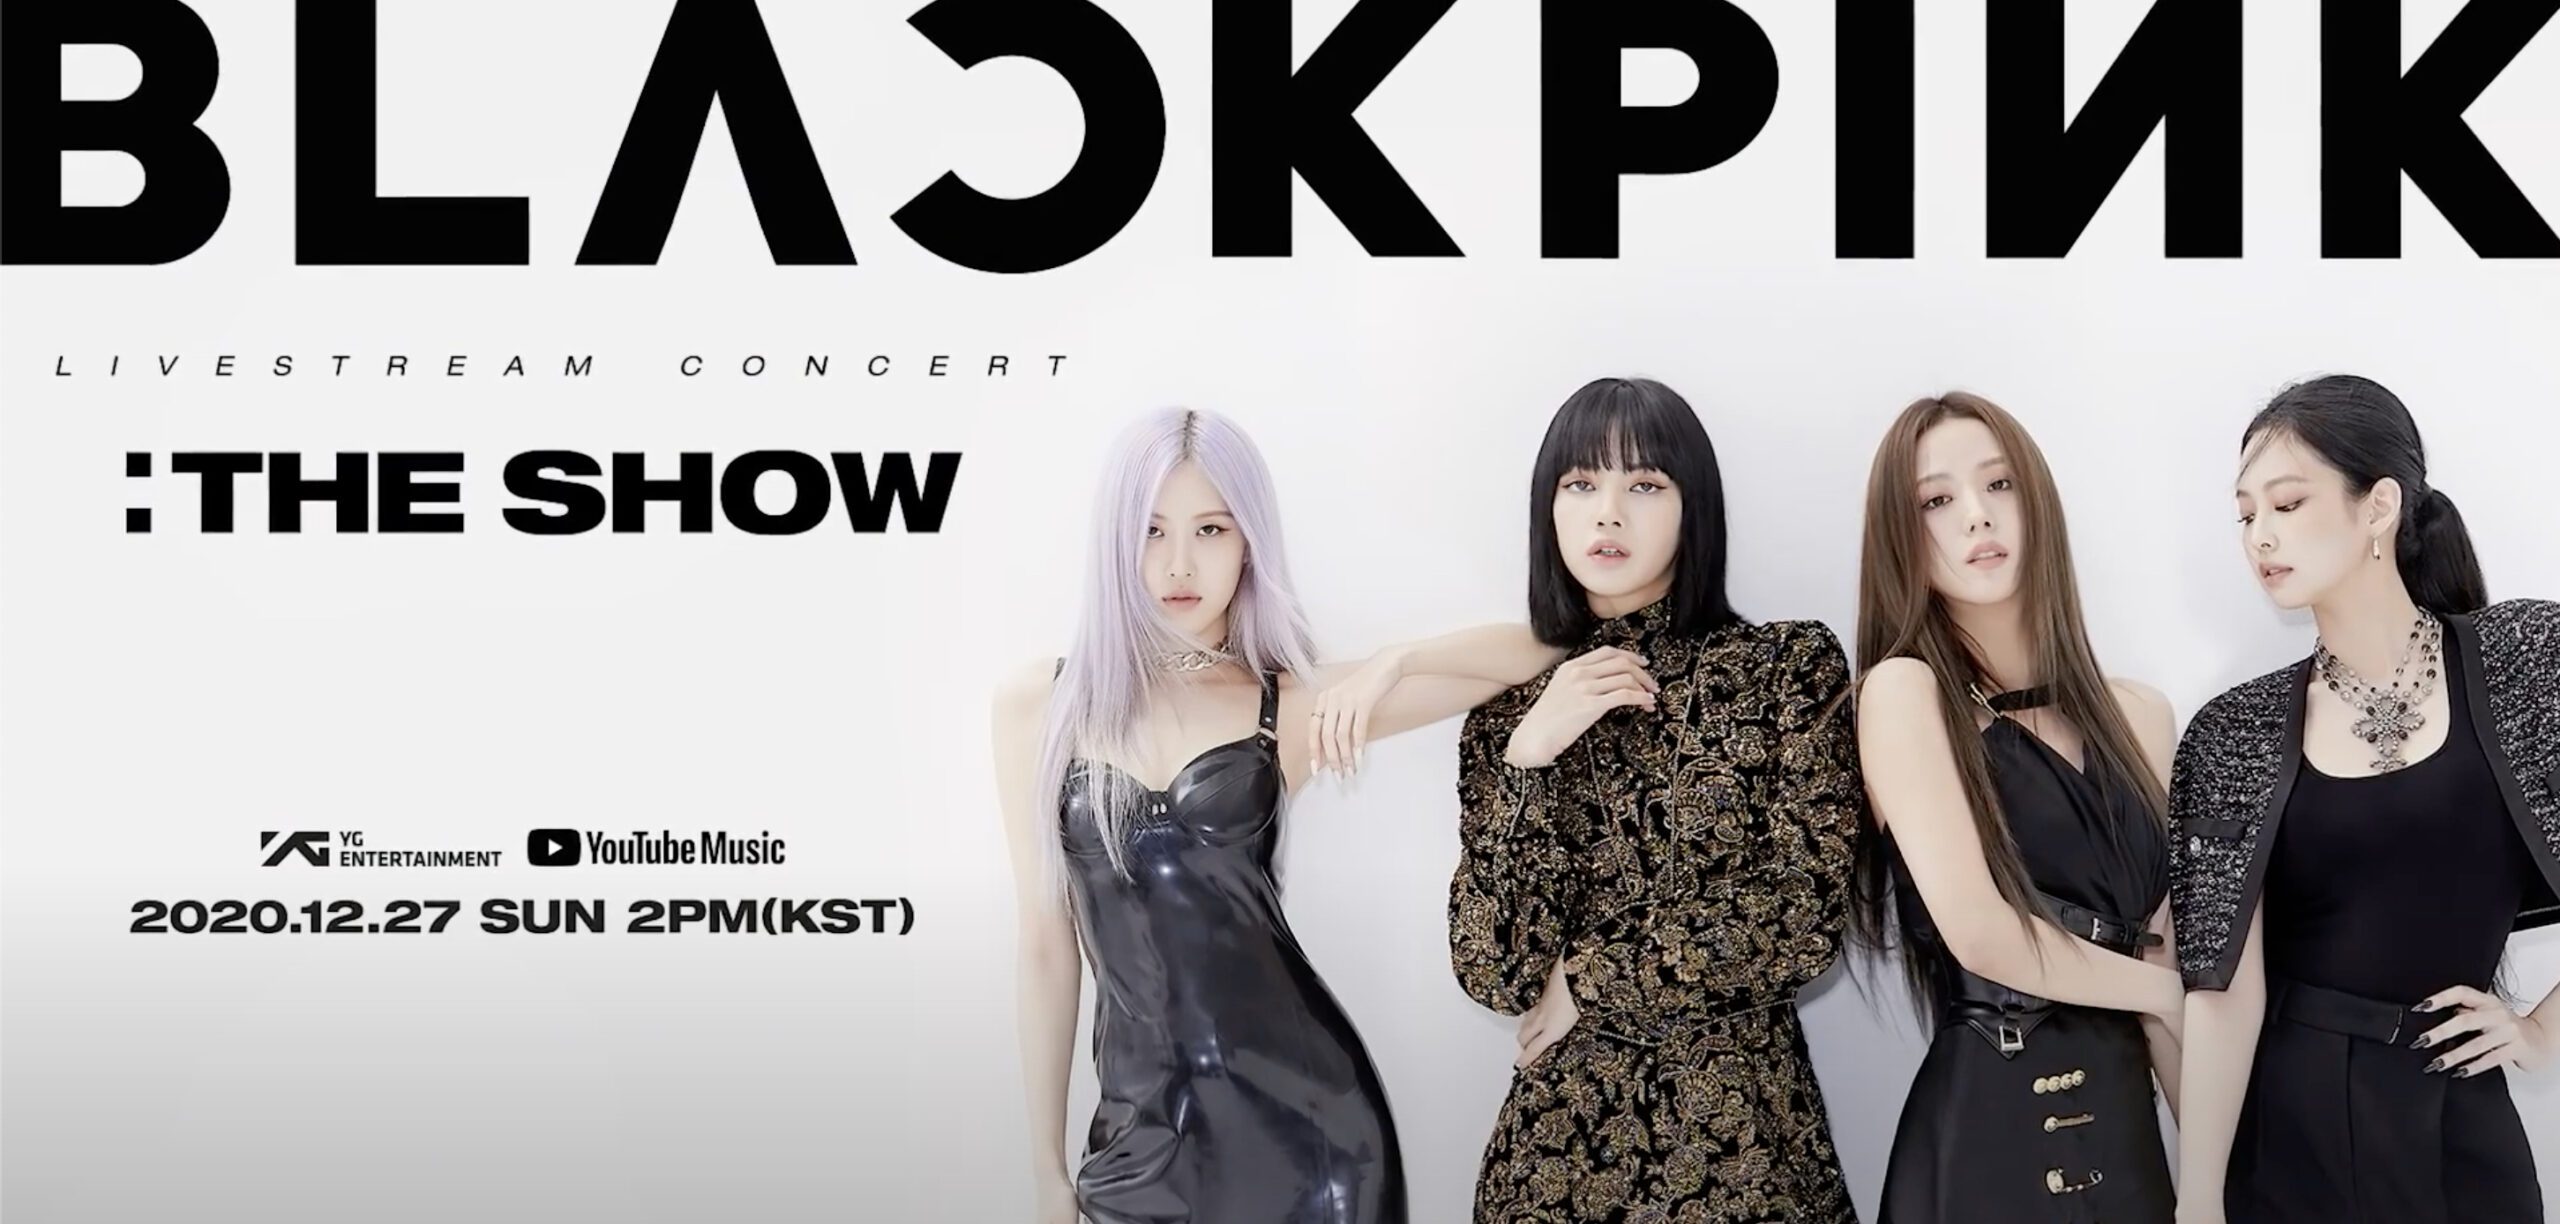 blackpink the show online concert date ticket price how to purchase ticket korebu com